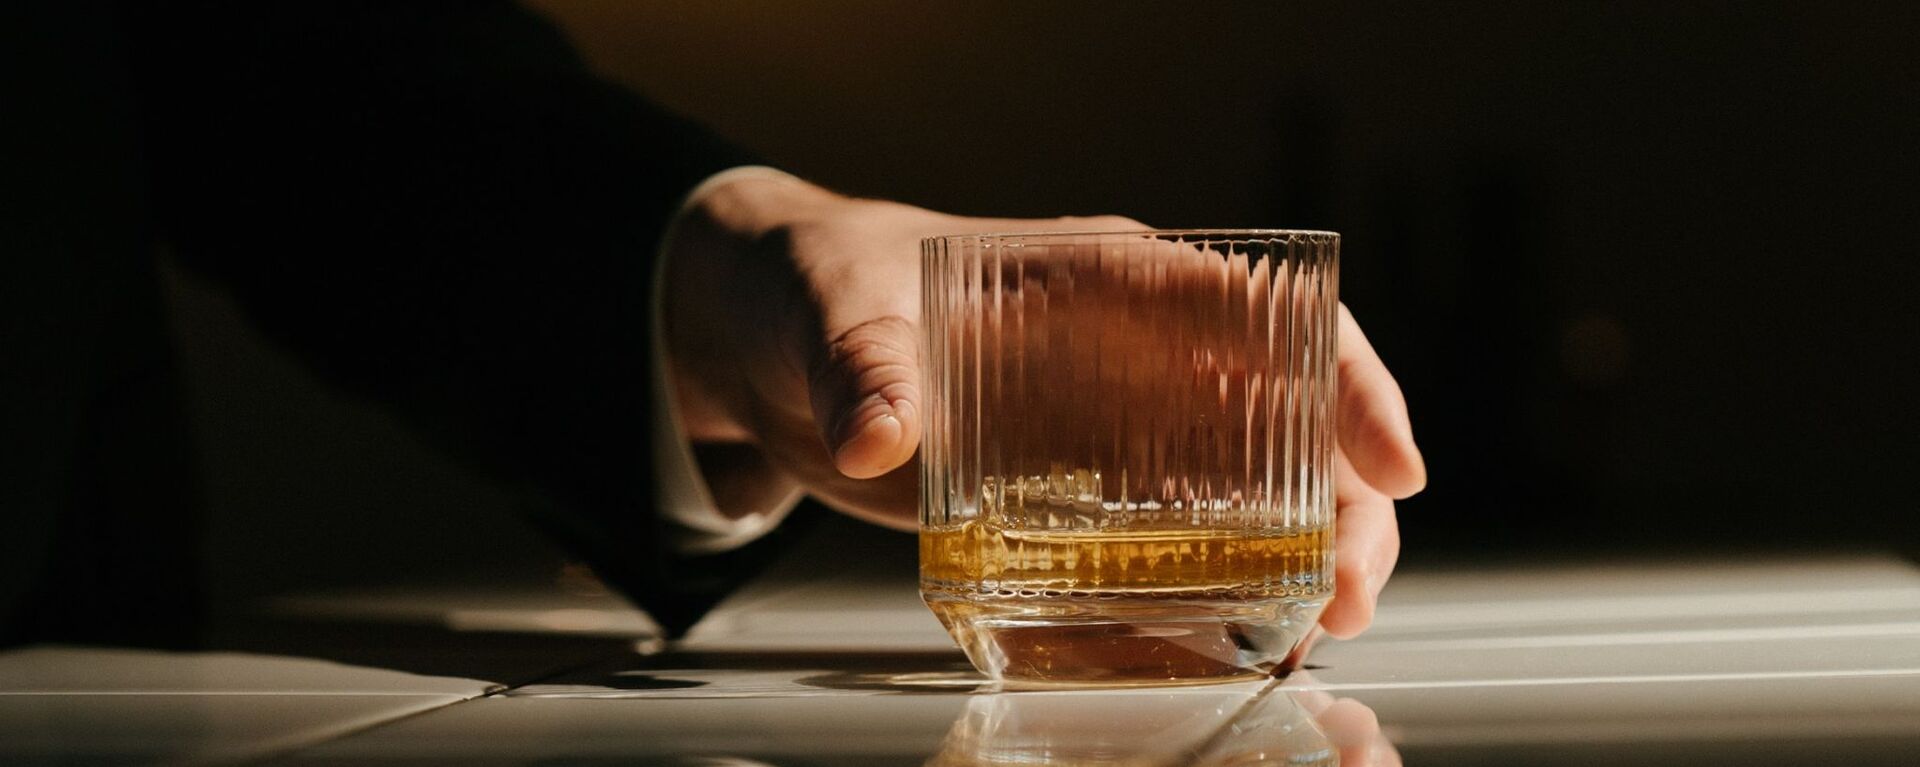 Un vaso de alcohol (imagen referencial) - Sputnik Mundo, 1920, 07.11.2020